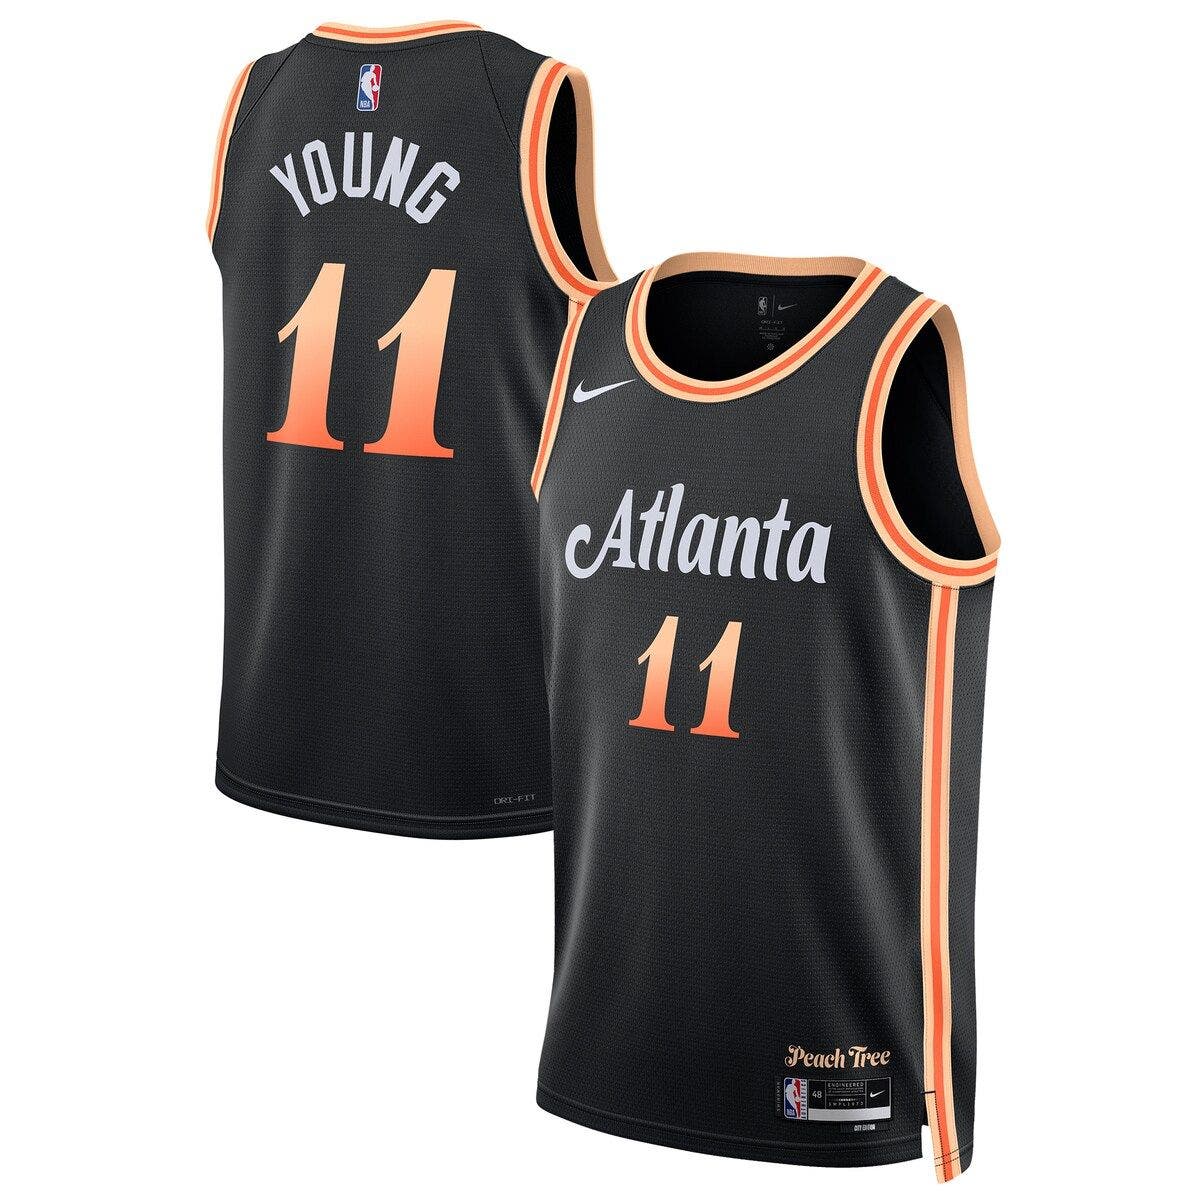 Nike NBA Trae Young Atlanta Hawks Dri-FIT Jersey Black/Orange